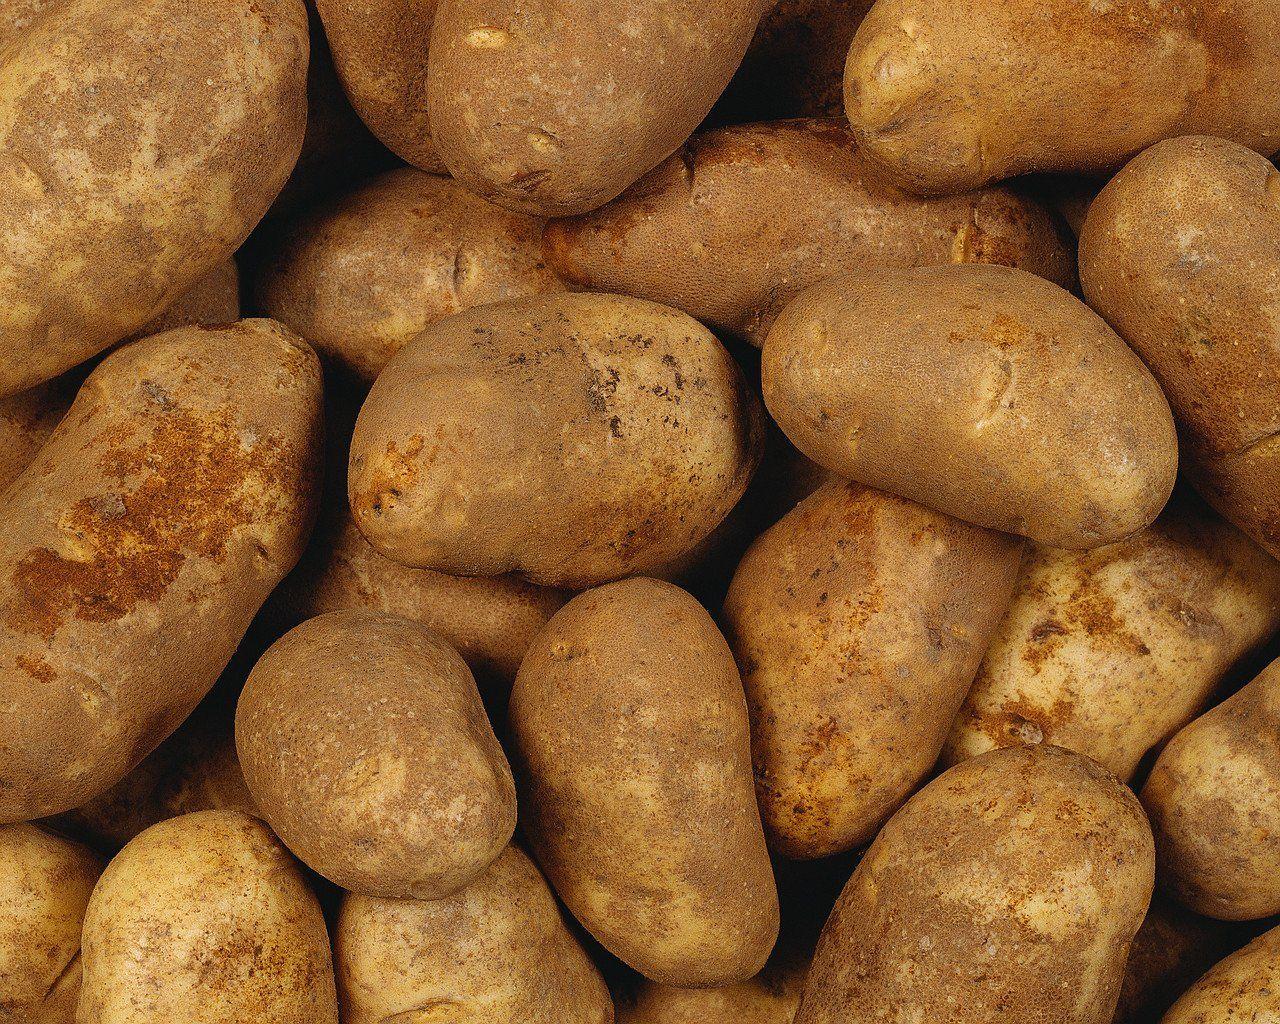 Potato HD Wallpaper and Background Image